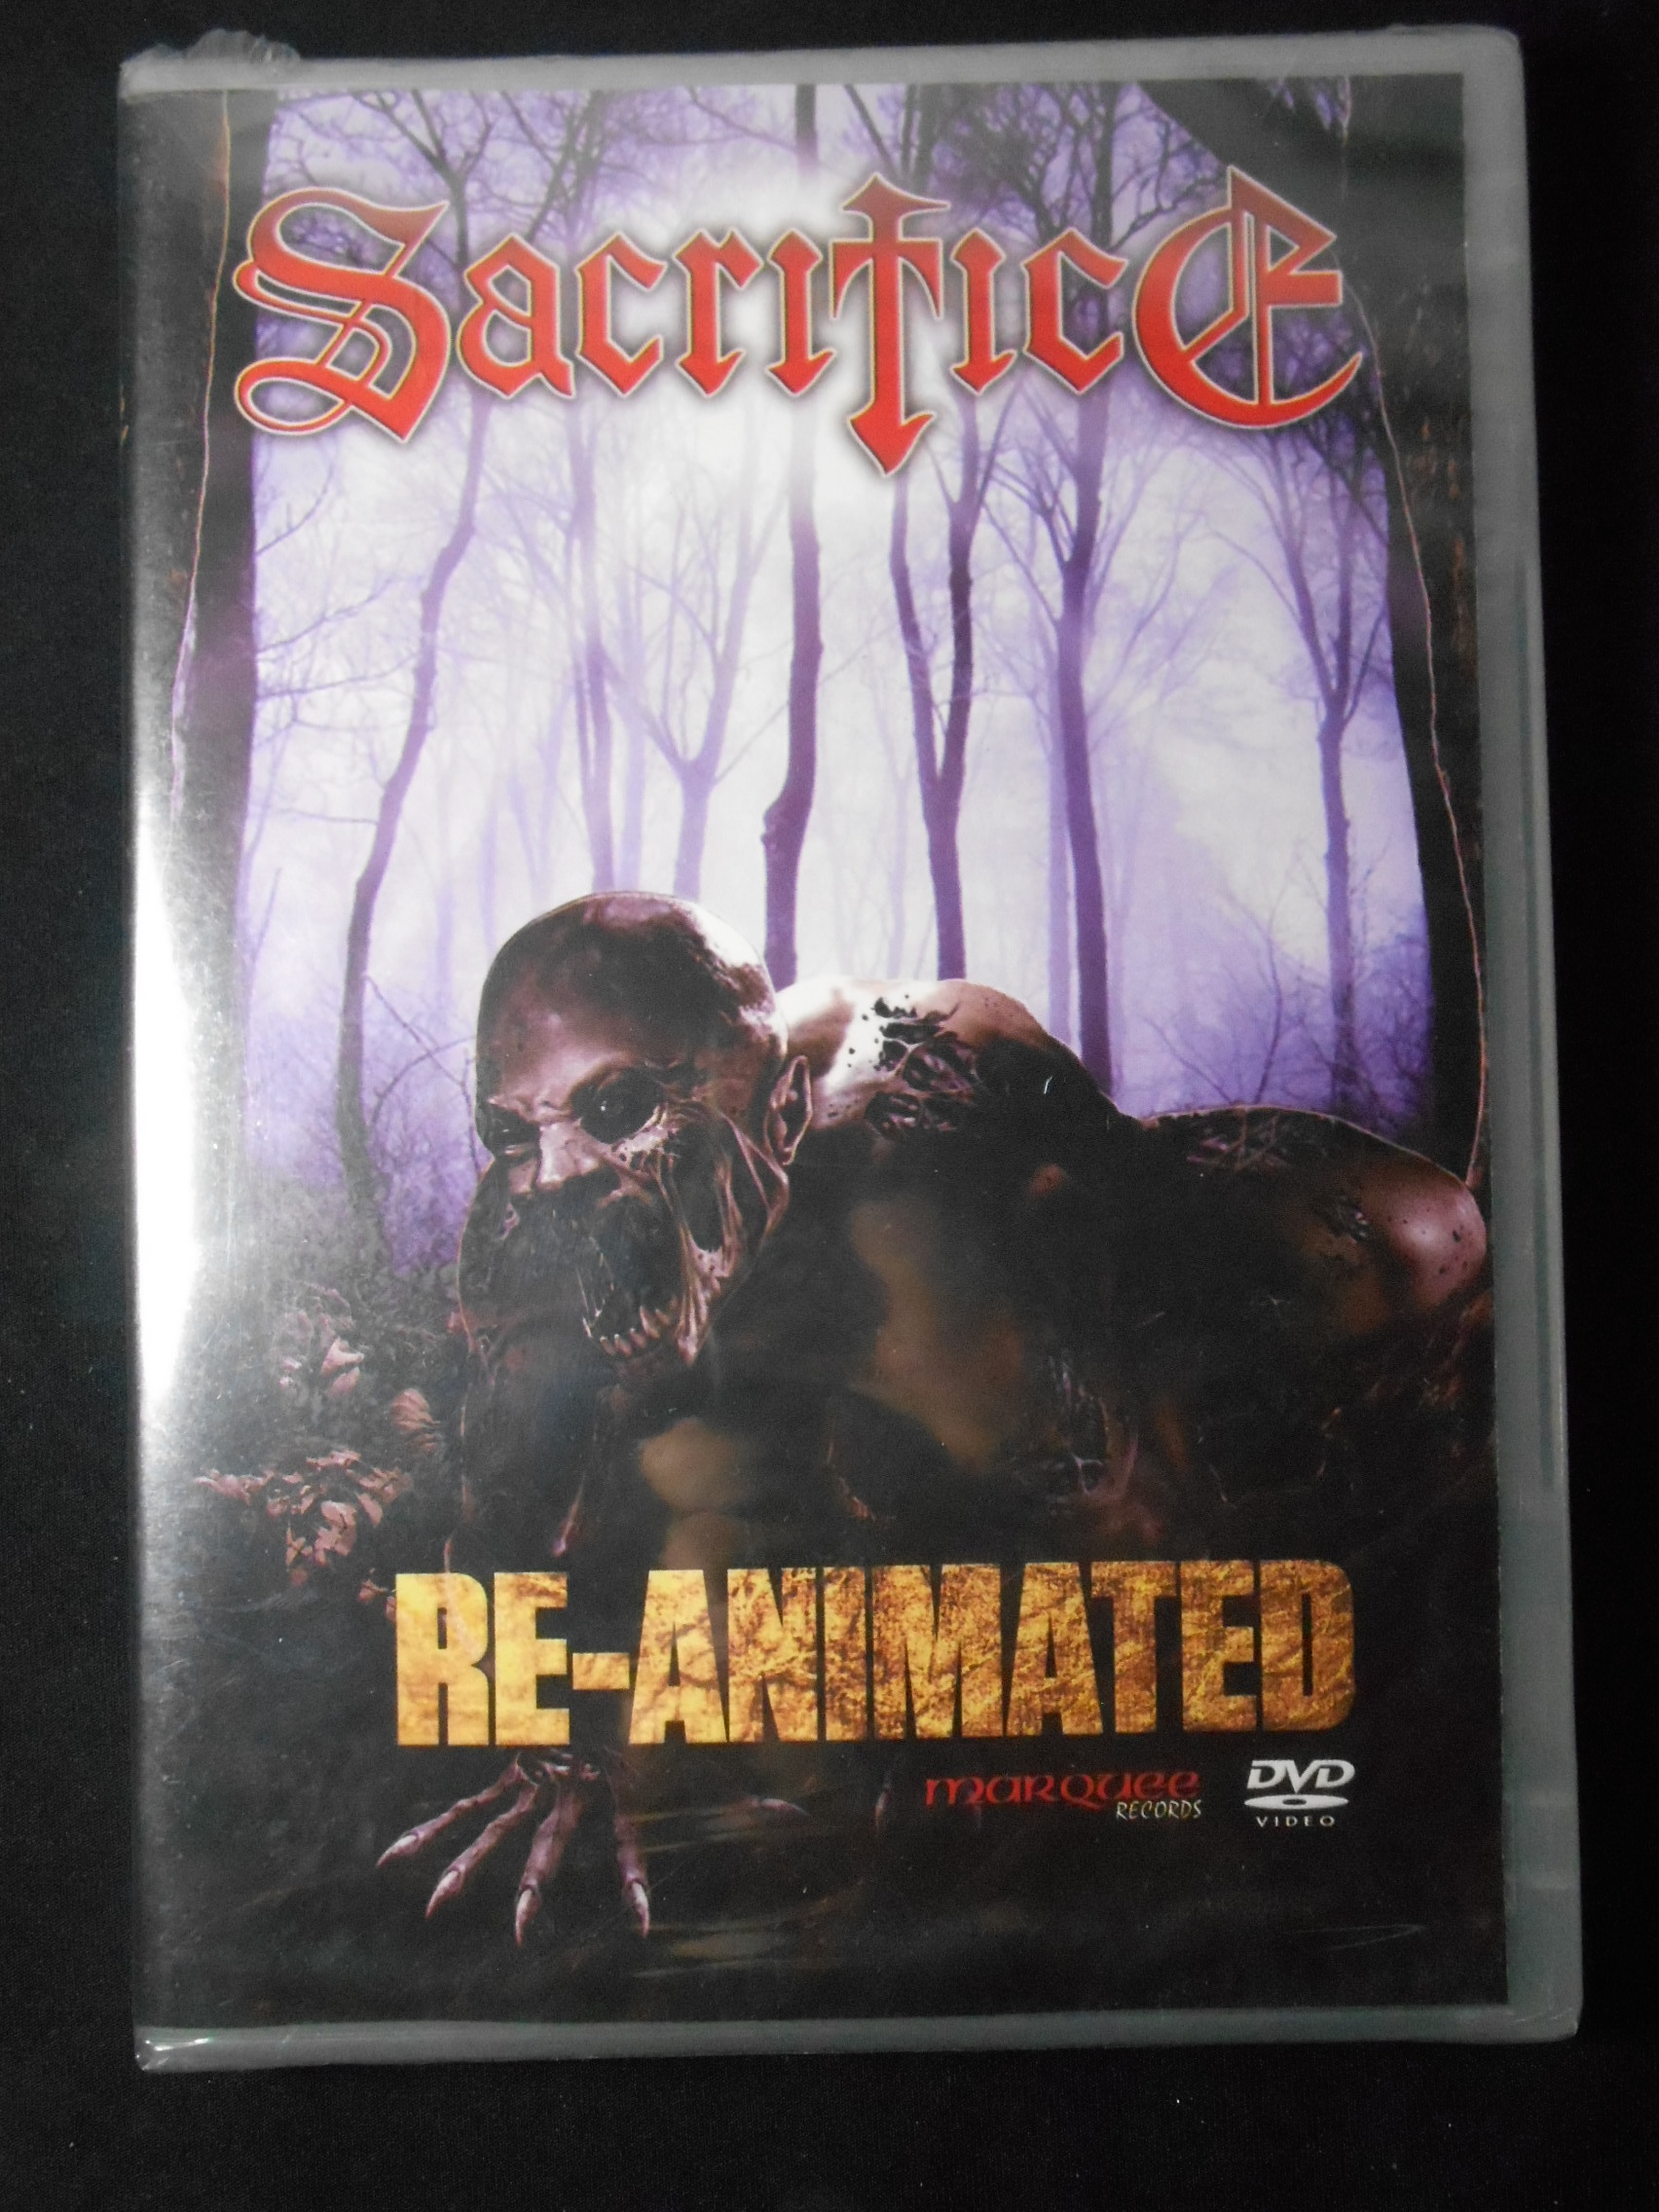 DVD - Sacrifice - Re Animated (duplo)